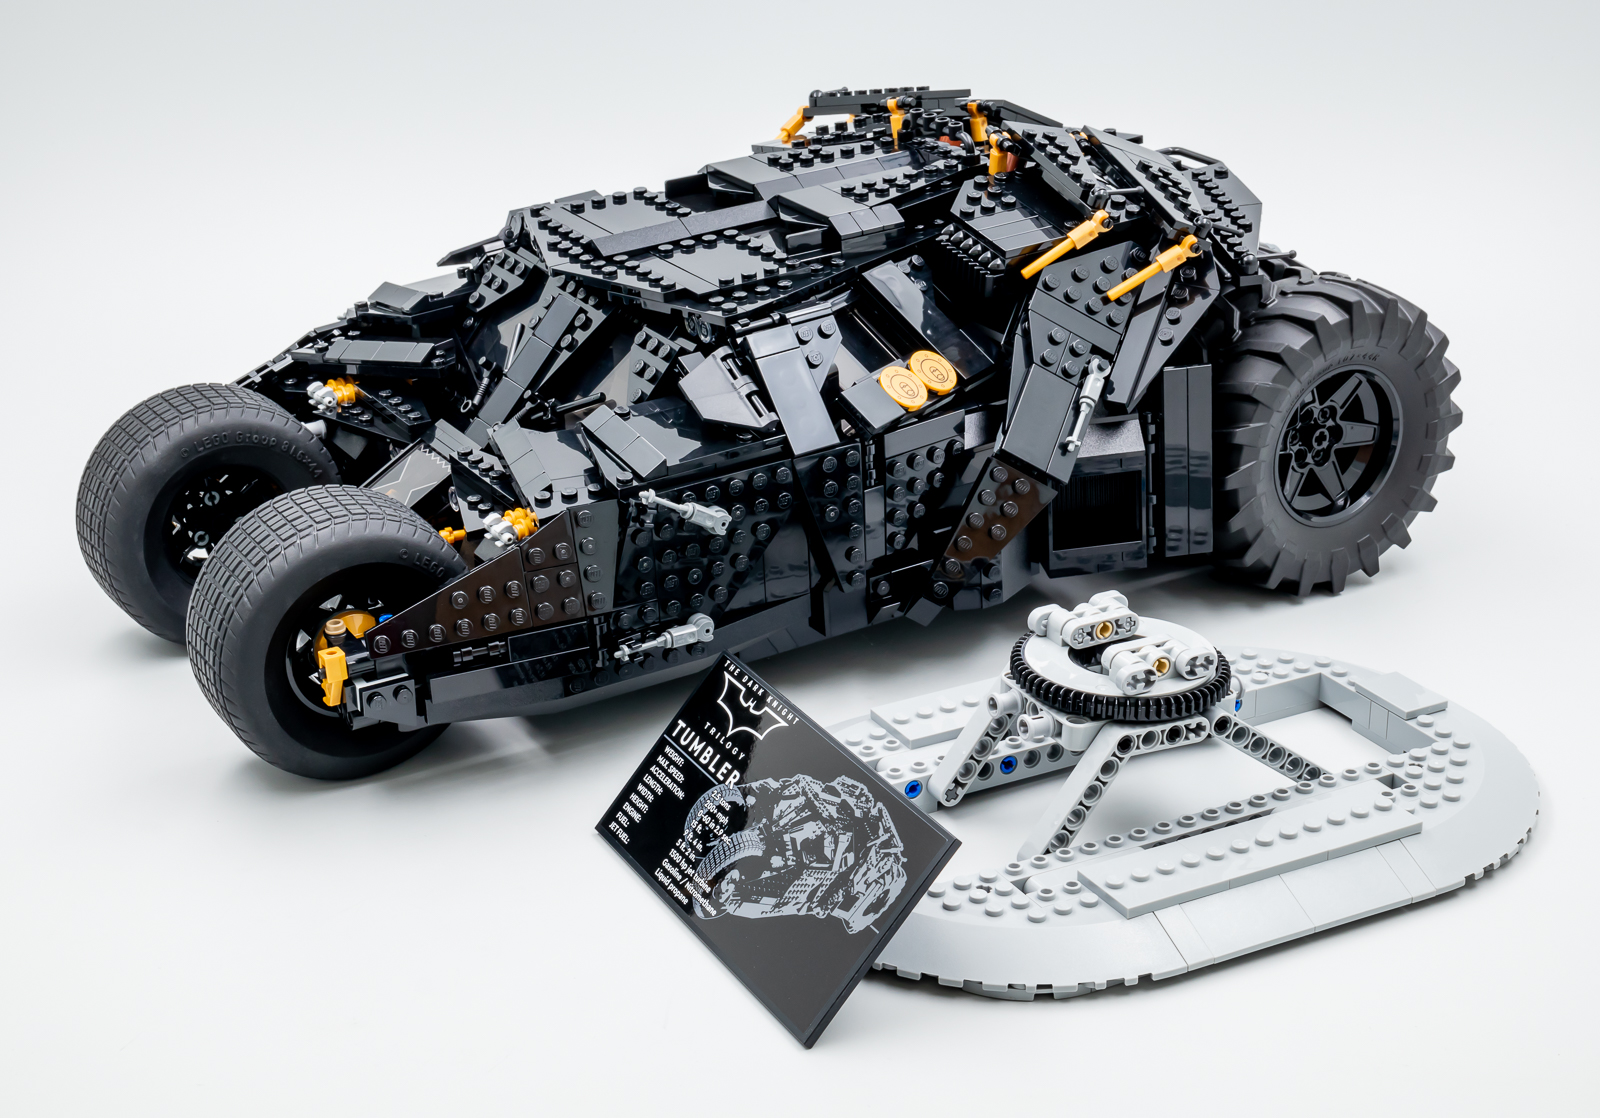 LEGO DC Comics 76240 pas cher, La Batmobile Tumbler